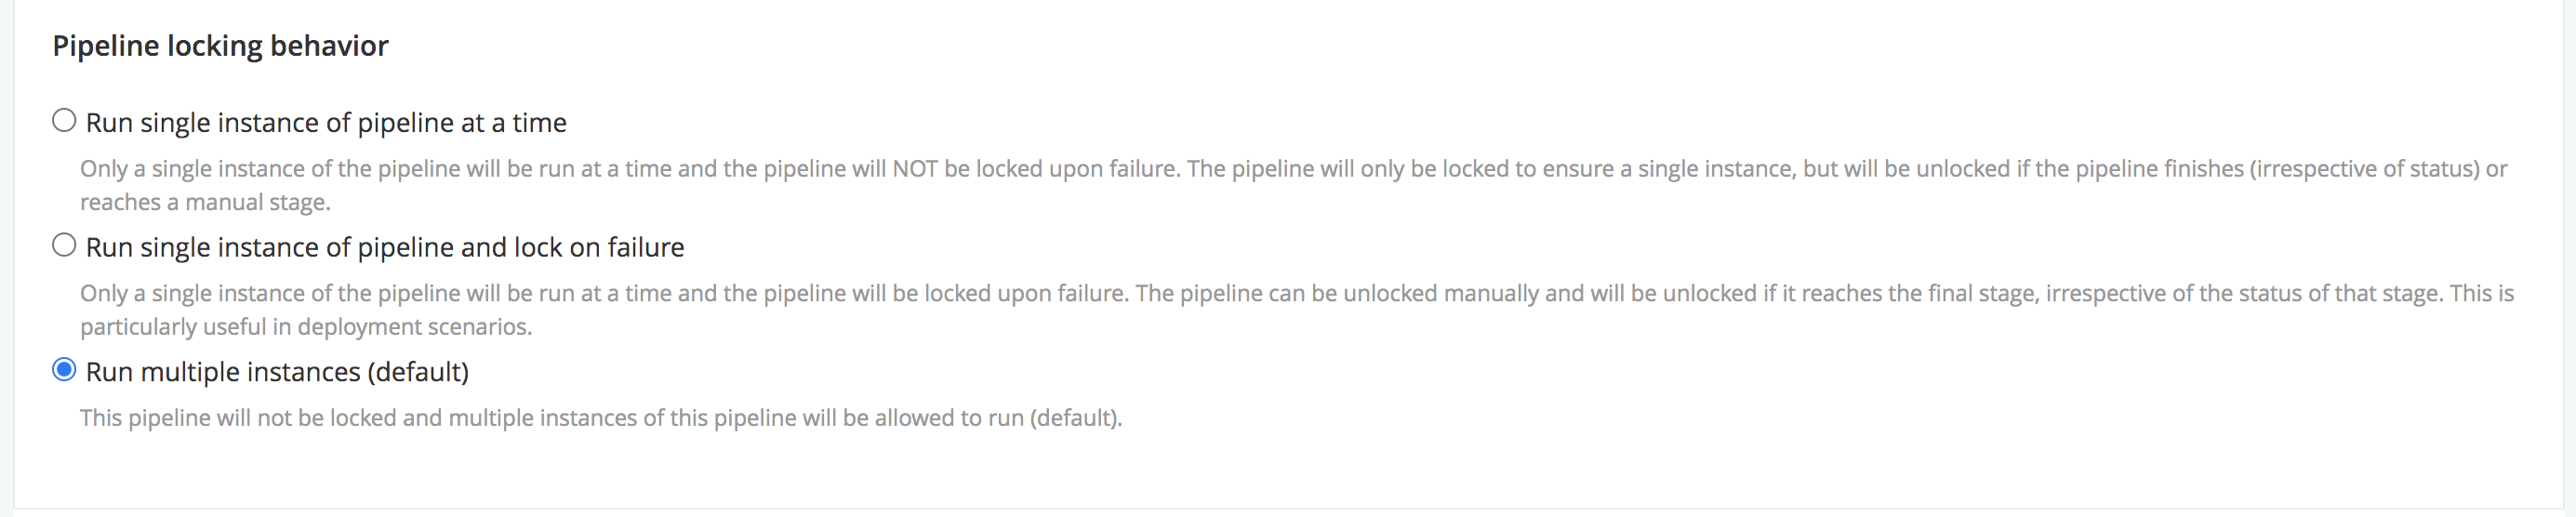 Pipeline locking behavior - None